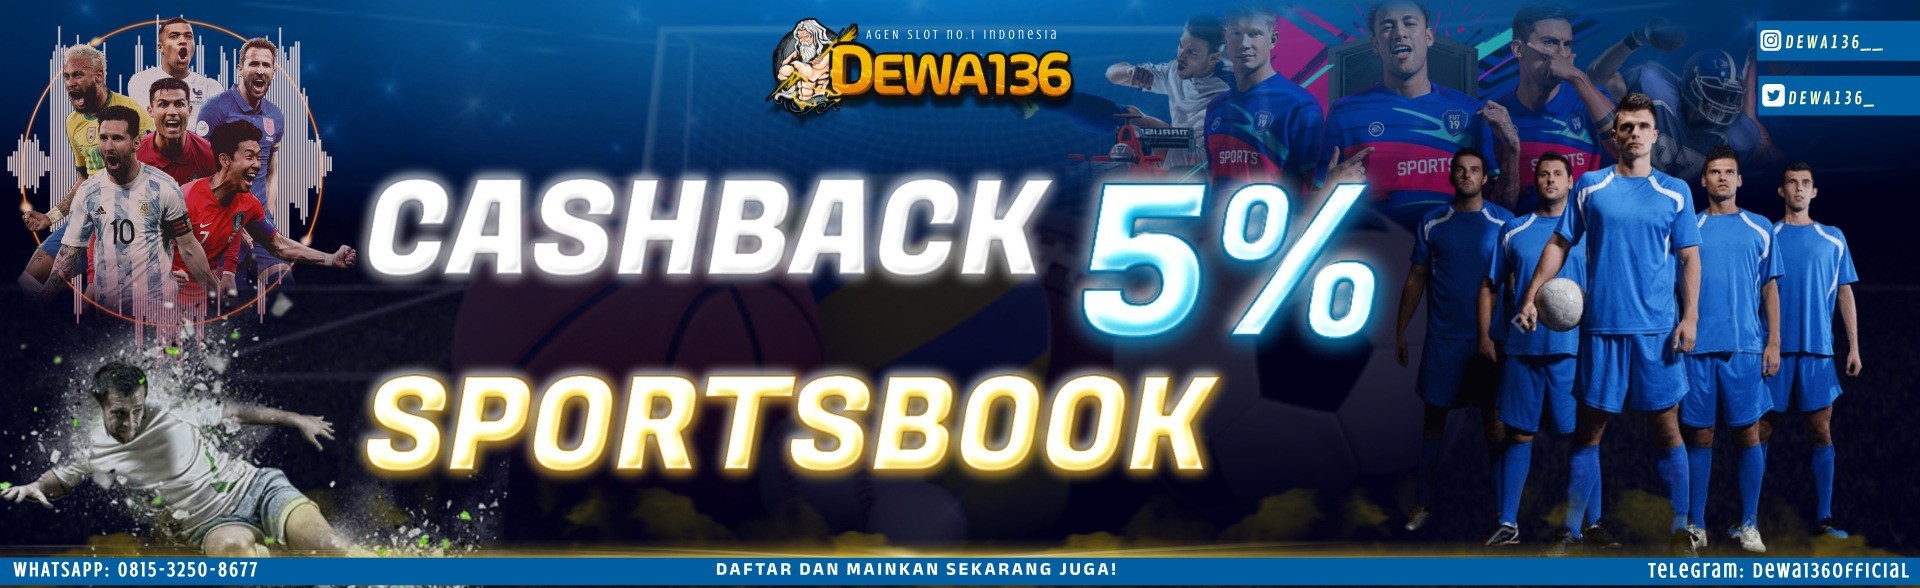 Cashback Sportsbook 5%